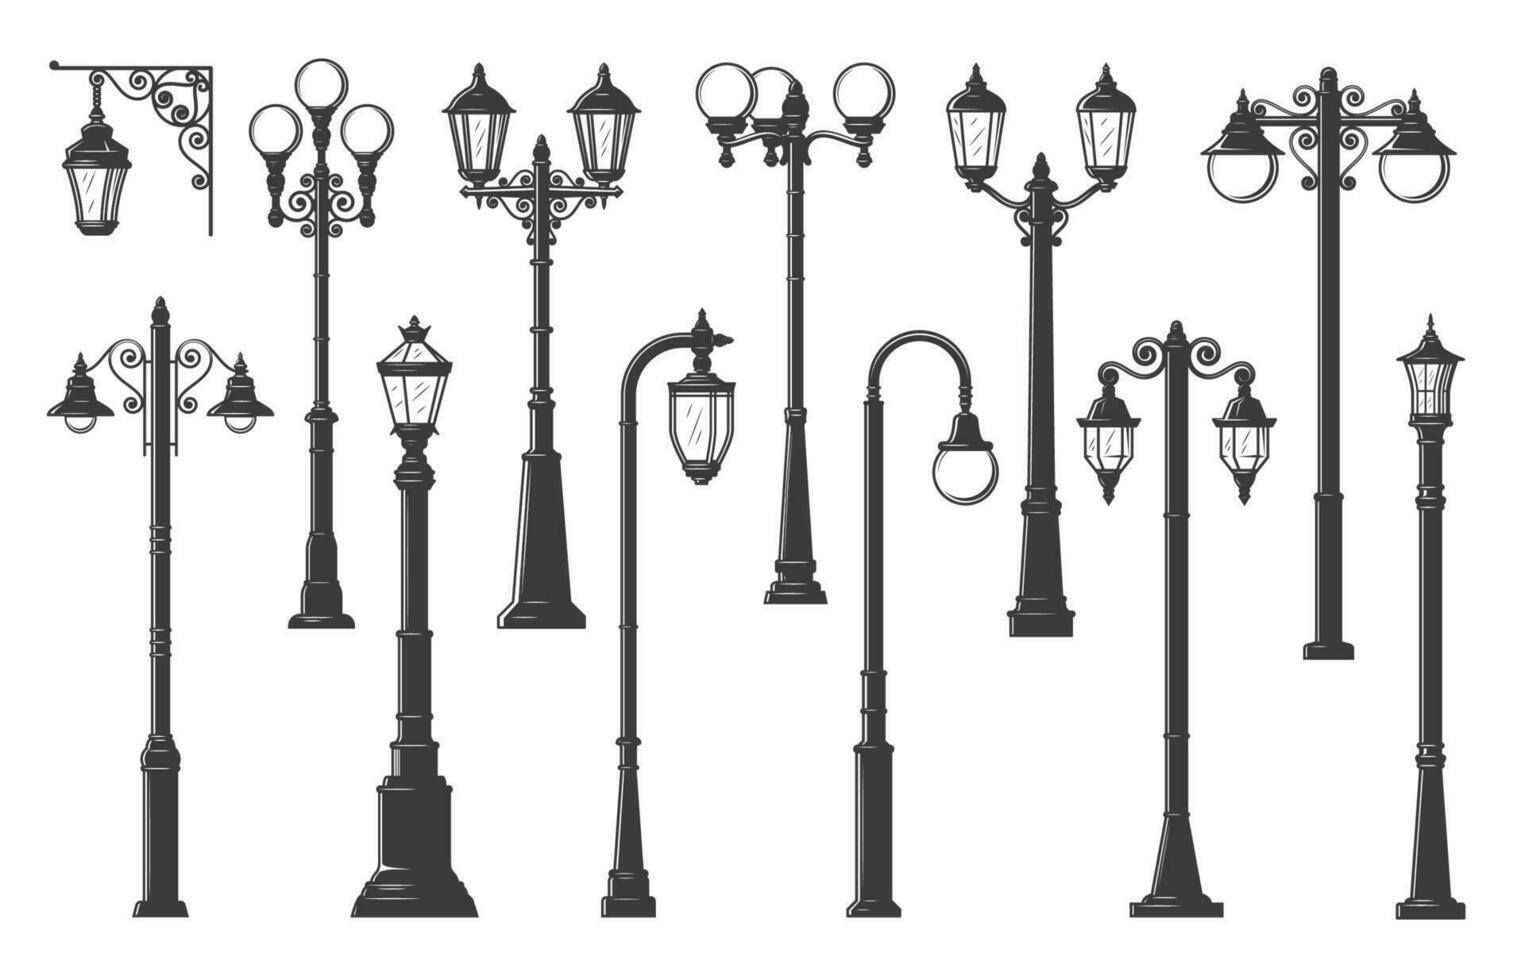 Streetlight streetlamps, lamppost street lanterns vector